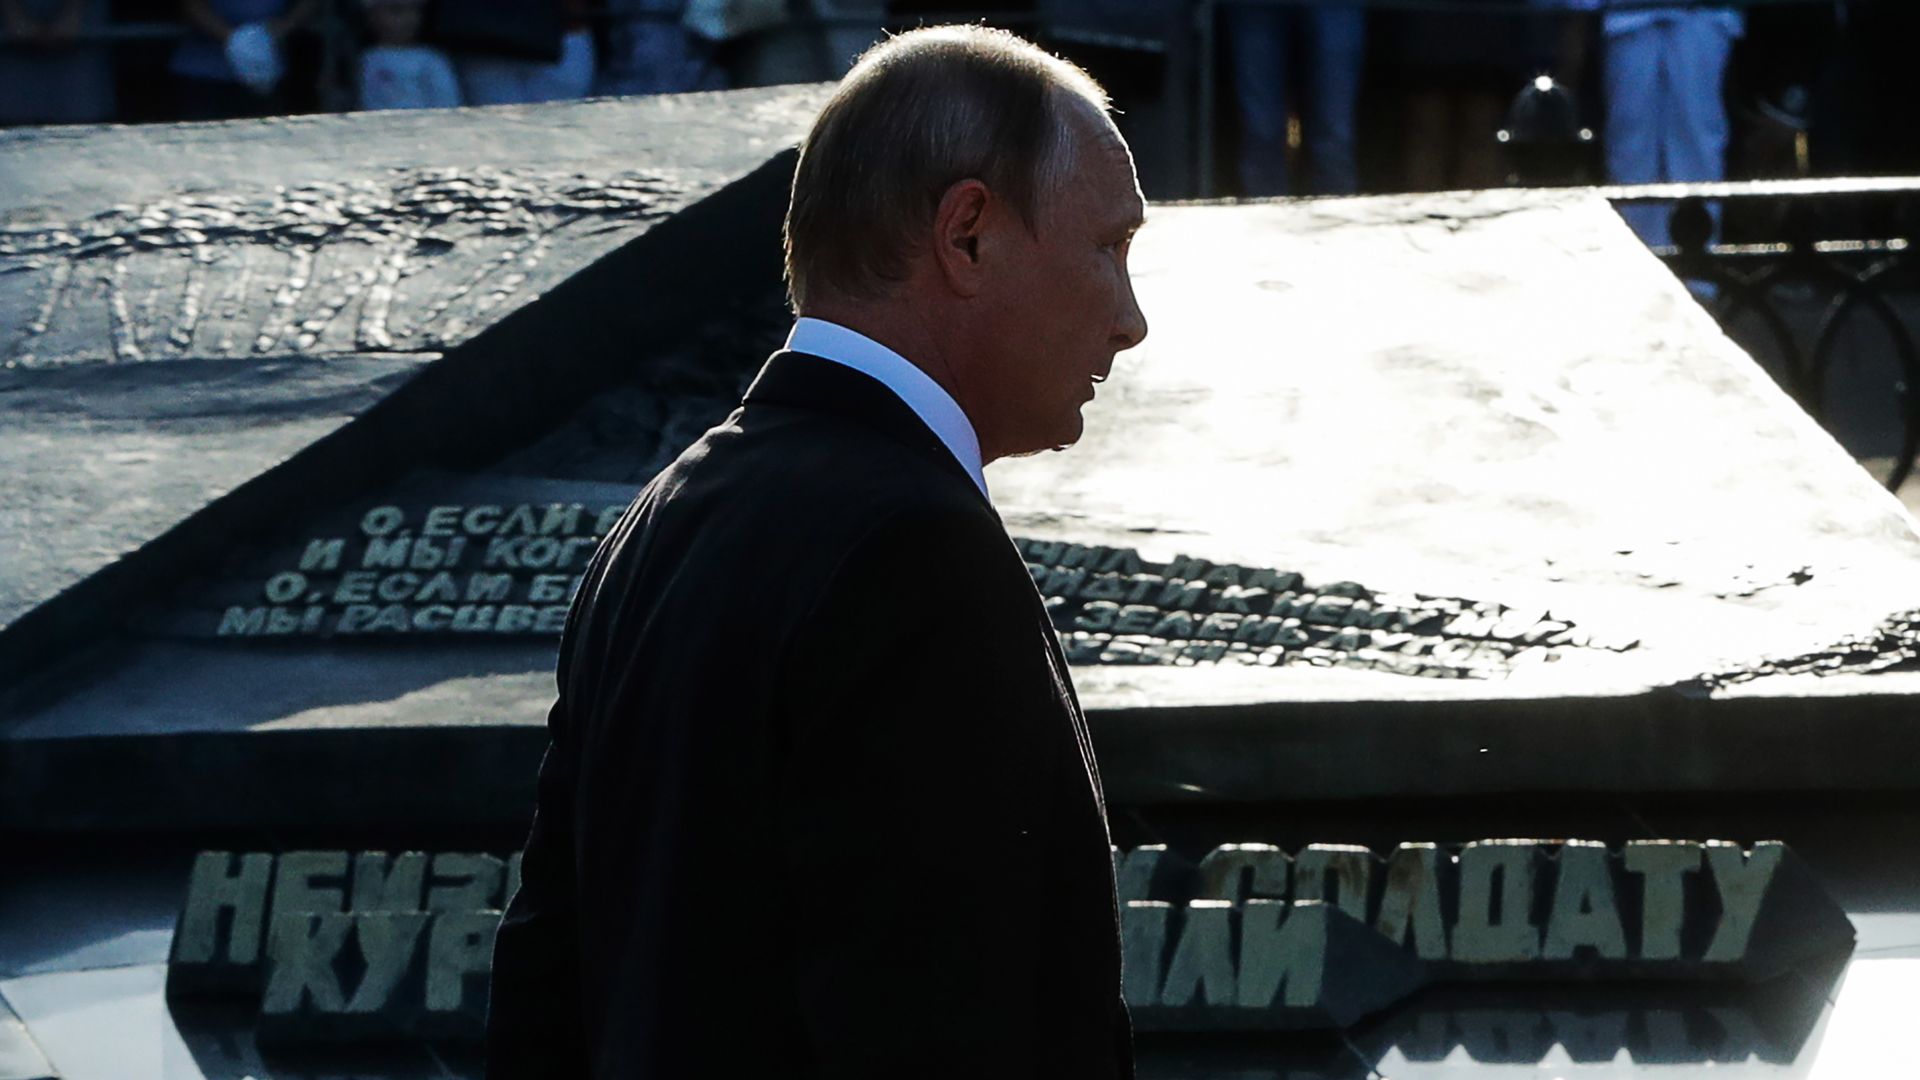 Vladimir Putin's profile as he's walking in a shadow